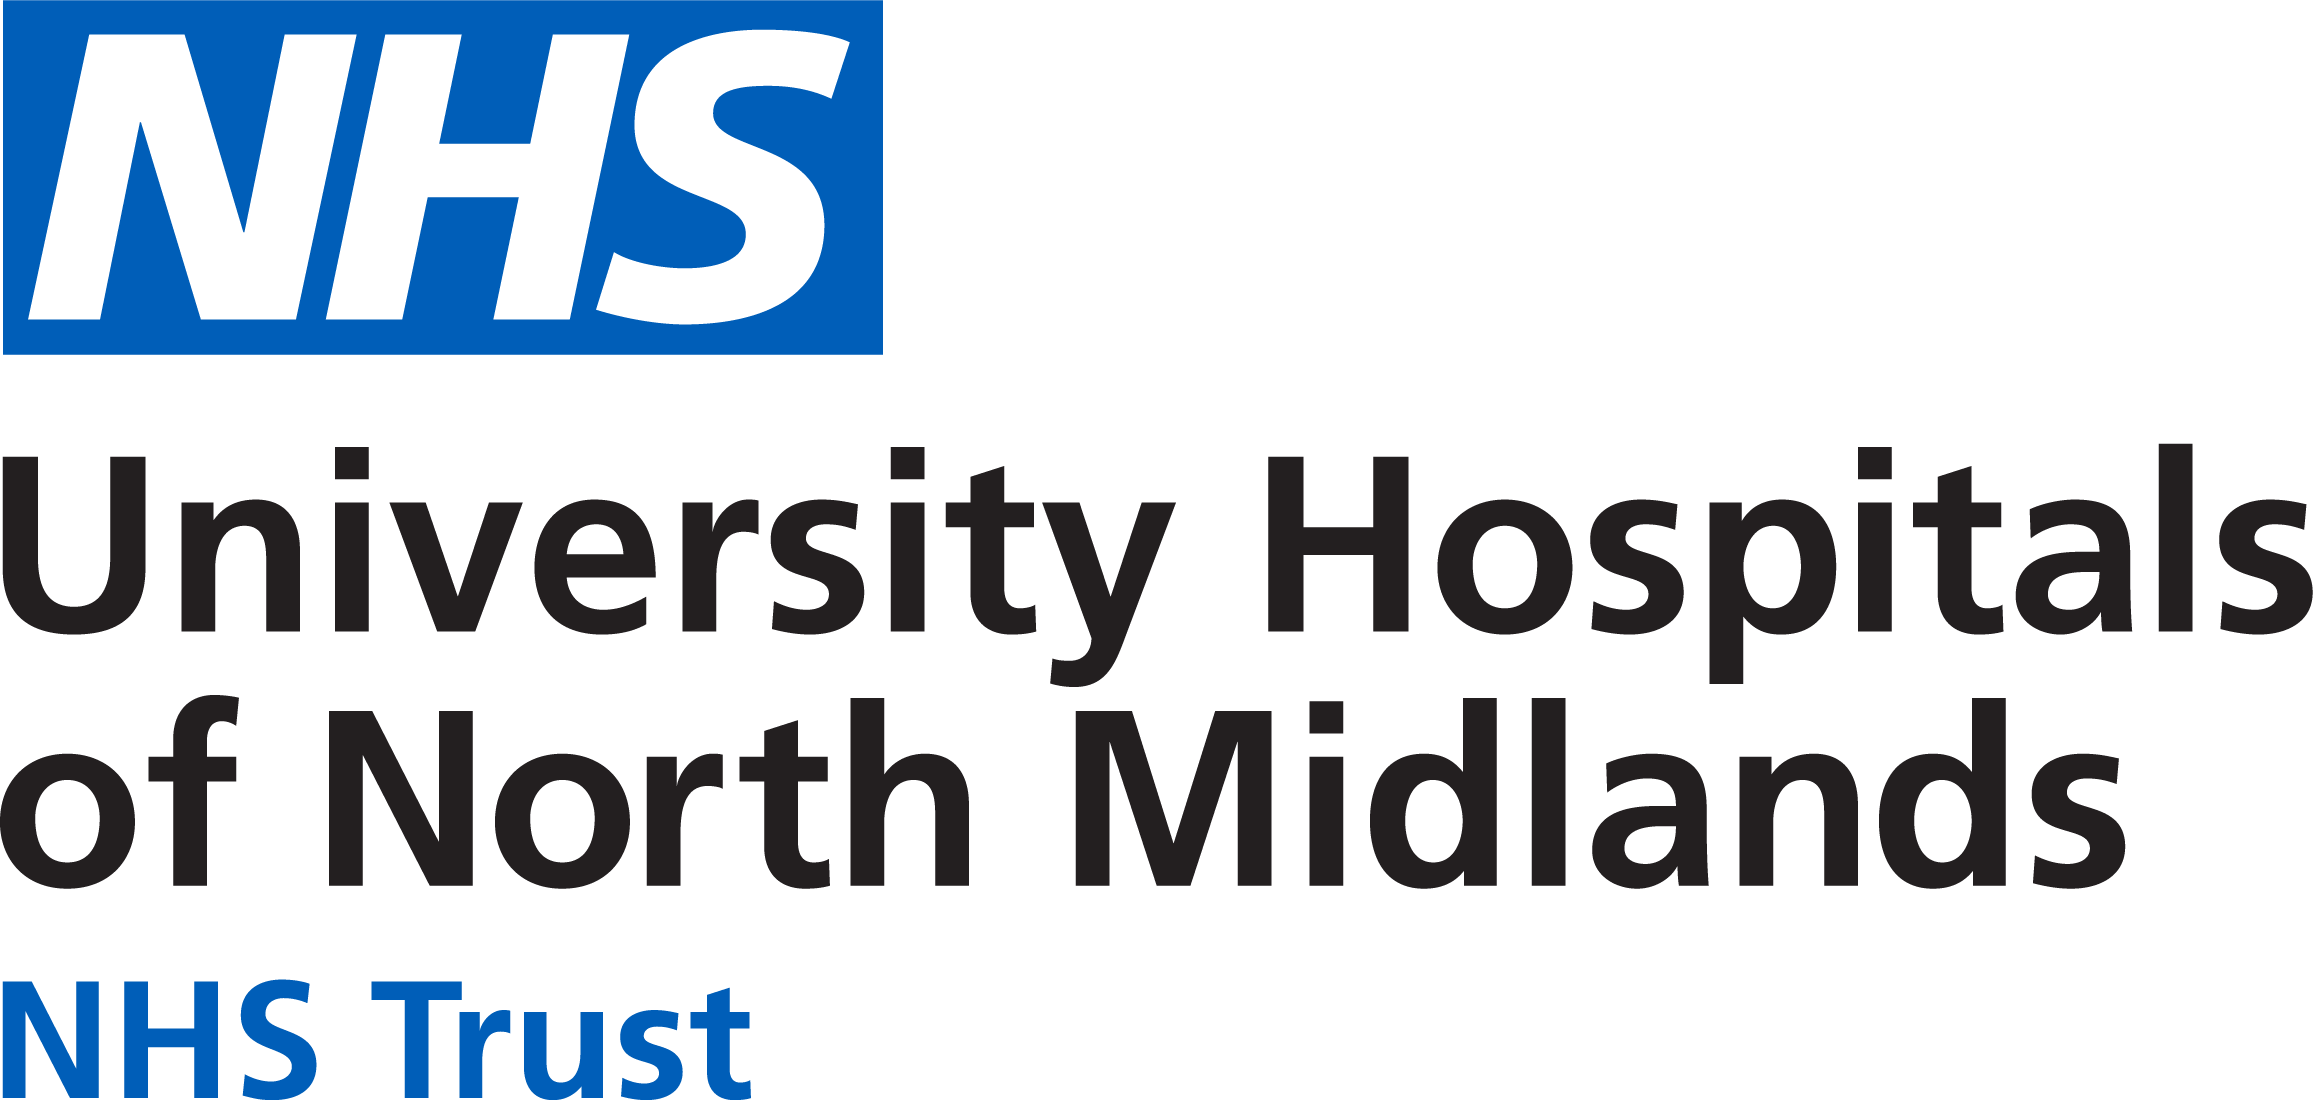 University Hospitals of North Midlands NHS Trust logo